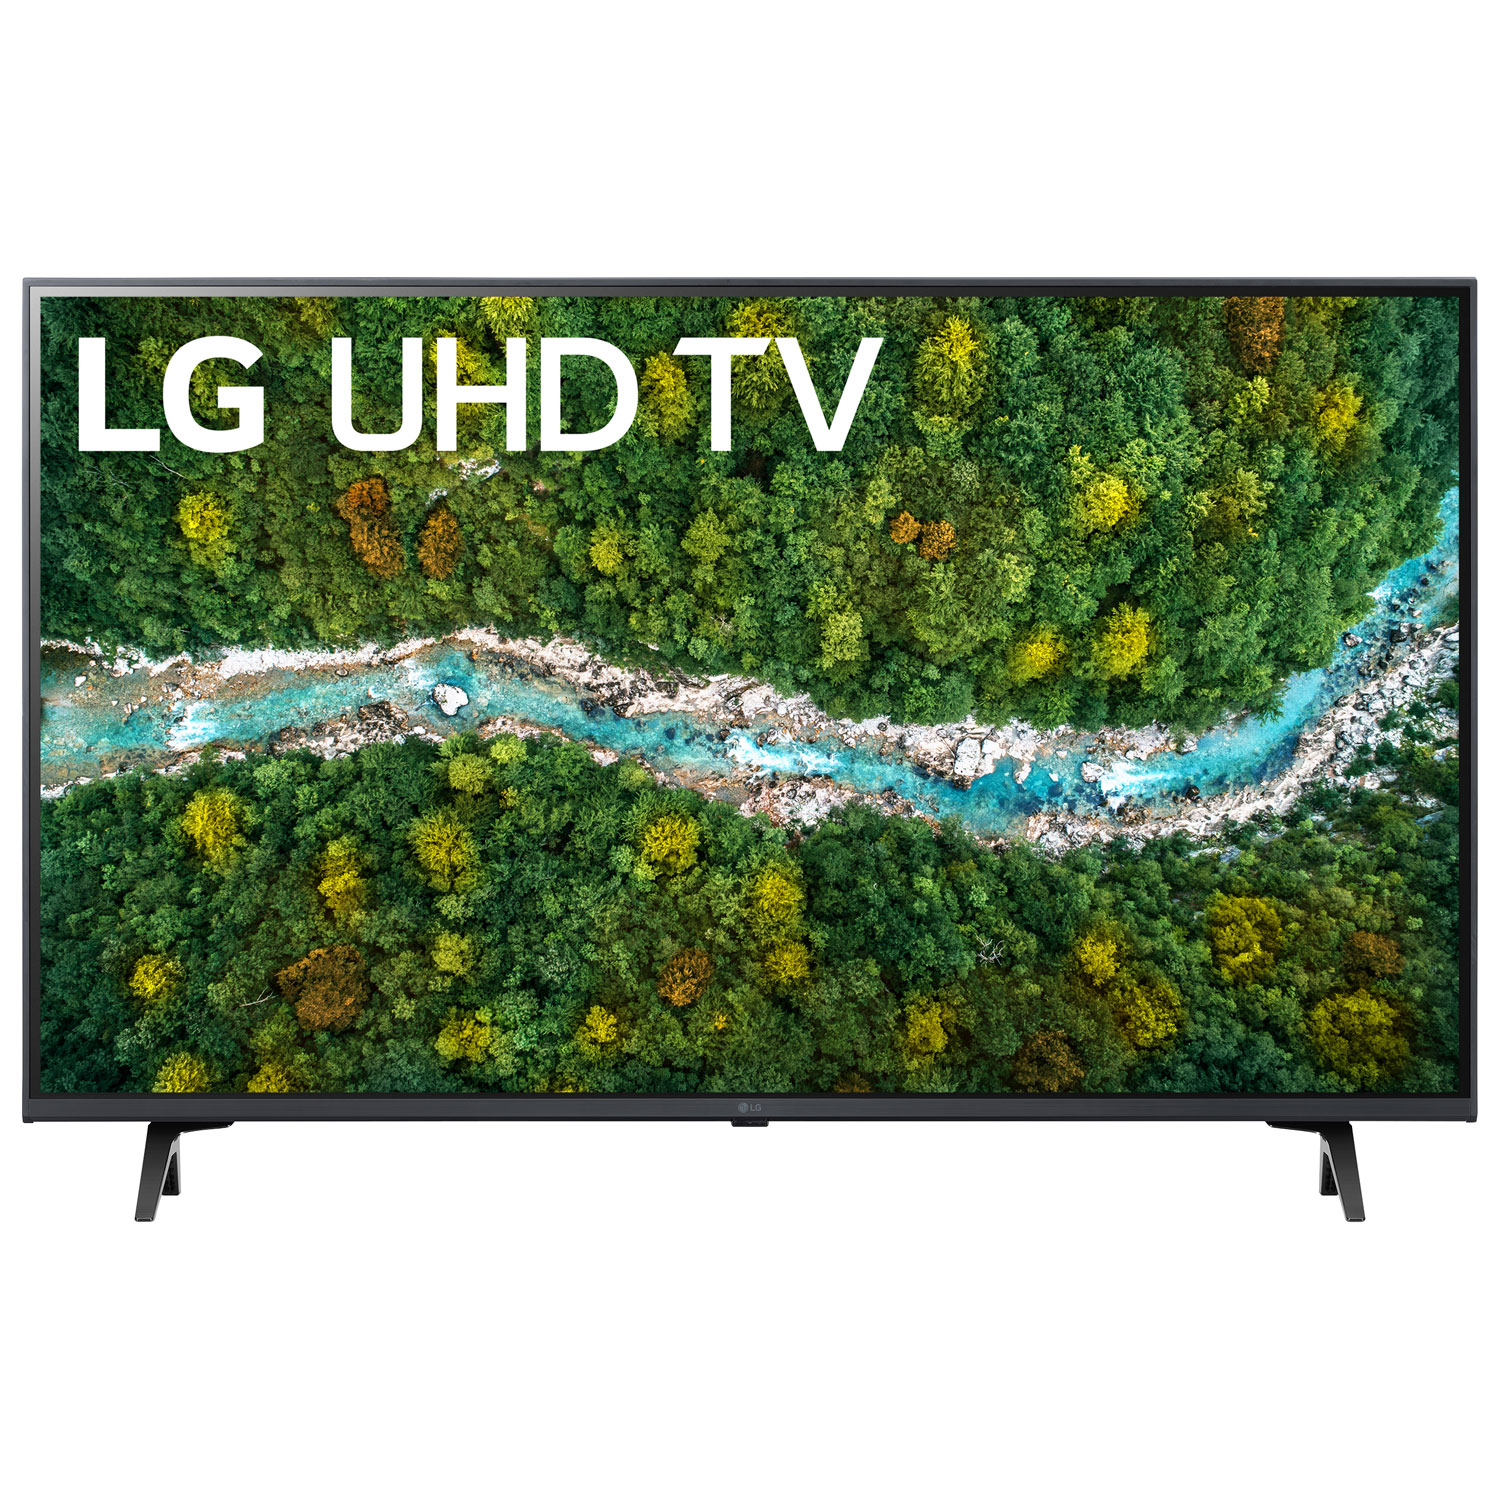 LG 43" 4K UHD HDR LED webOS Smart TV (43UP7700PUB) - 2021